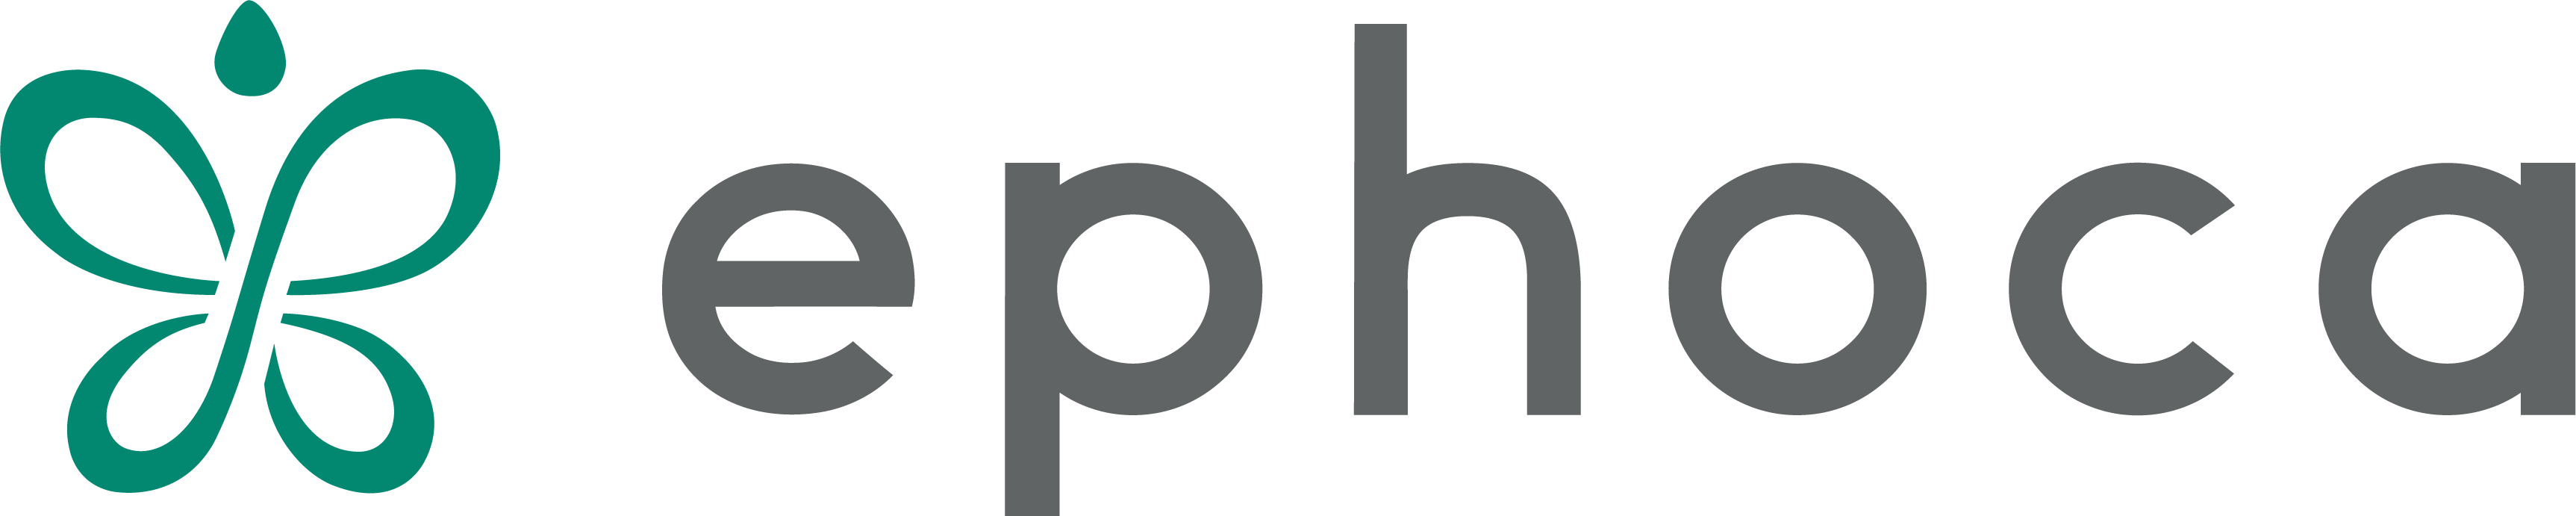 Ephoca logo